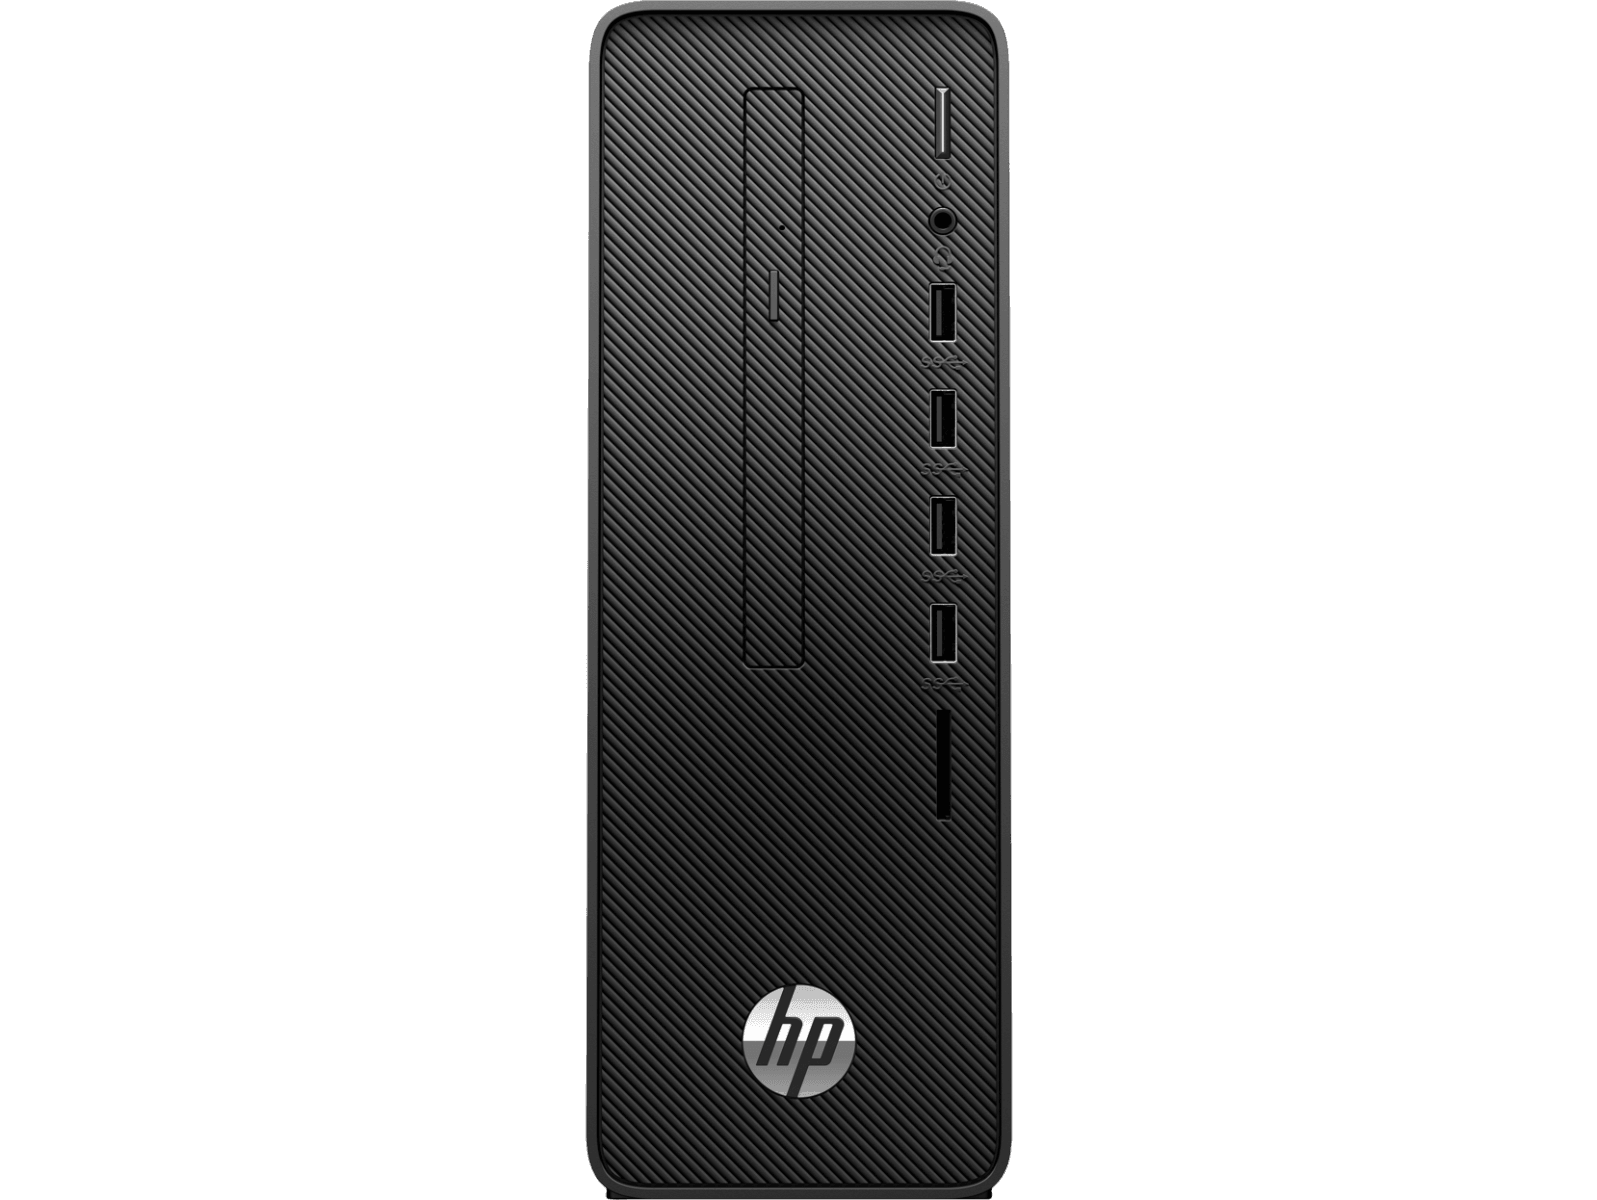 Desktop HP HPCM 280 G5 SFF i3-10 4GB 500GB W10P 3Y0U9LA#AK4 - Mega Market